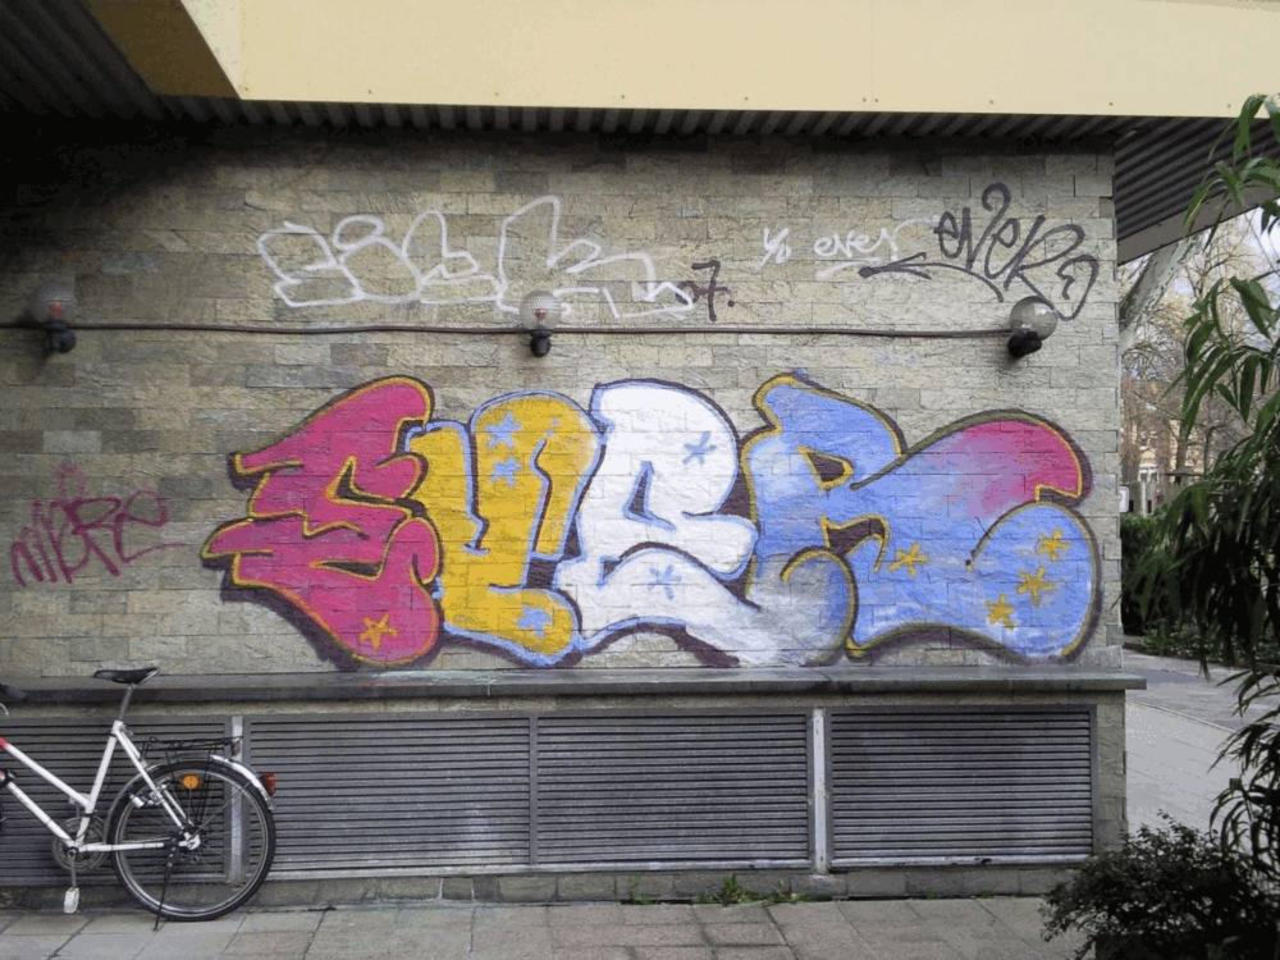 Graffiti Karlsruhe, Germany
#streetart #art #urbanart #graffiti #karlsruhe http://t.co/bBb7JnKNLO